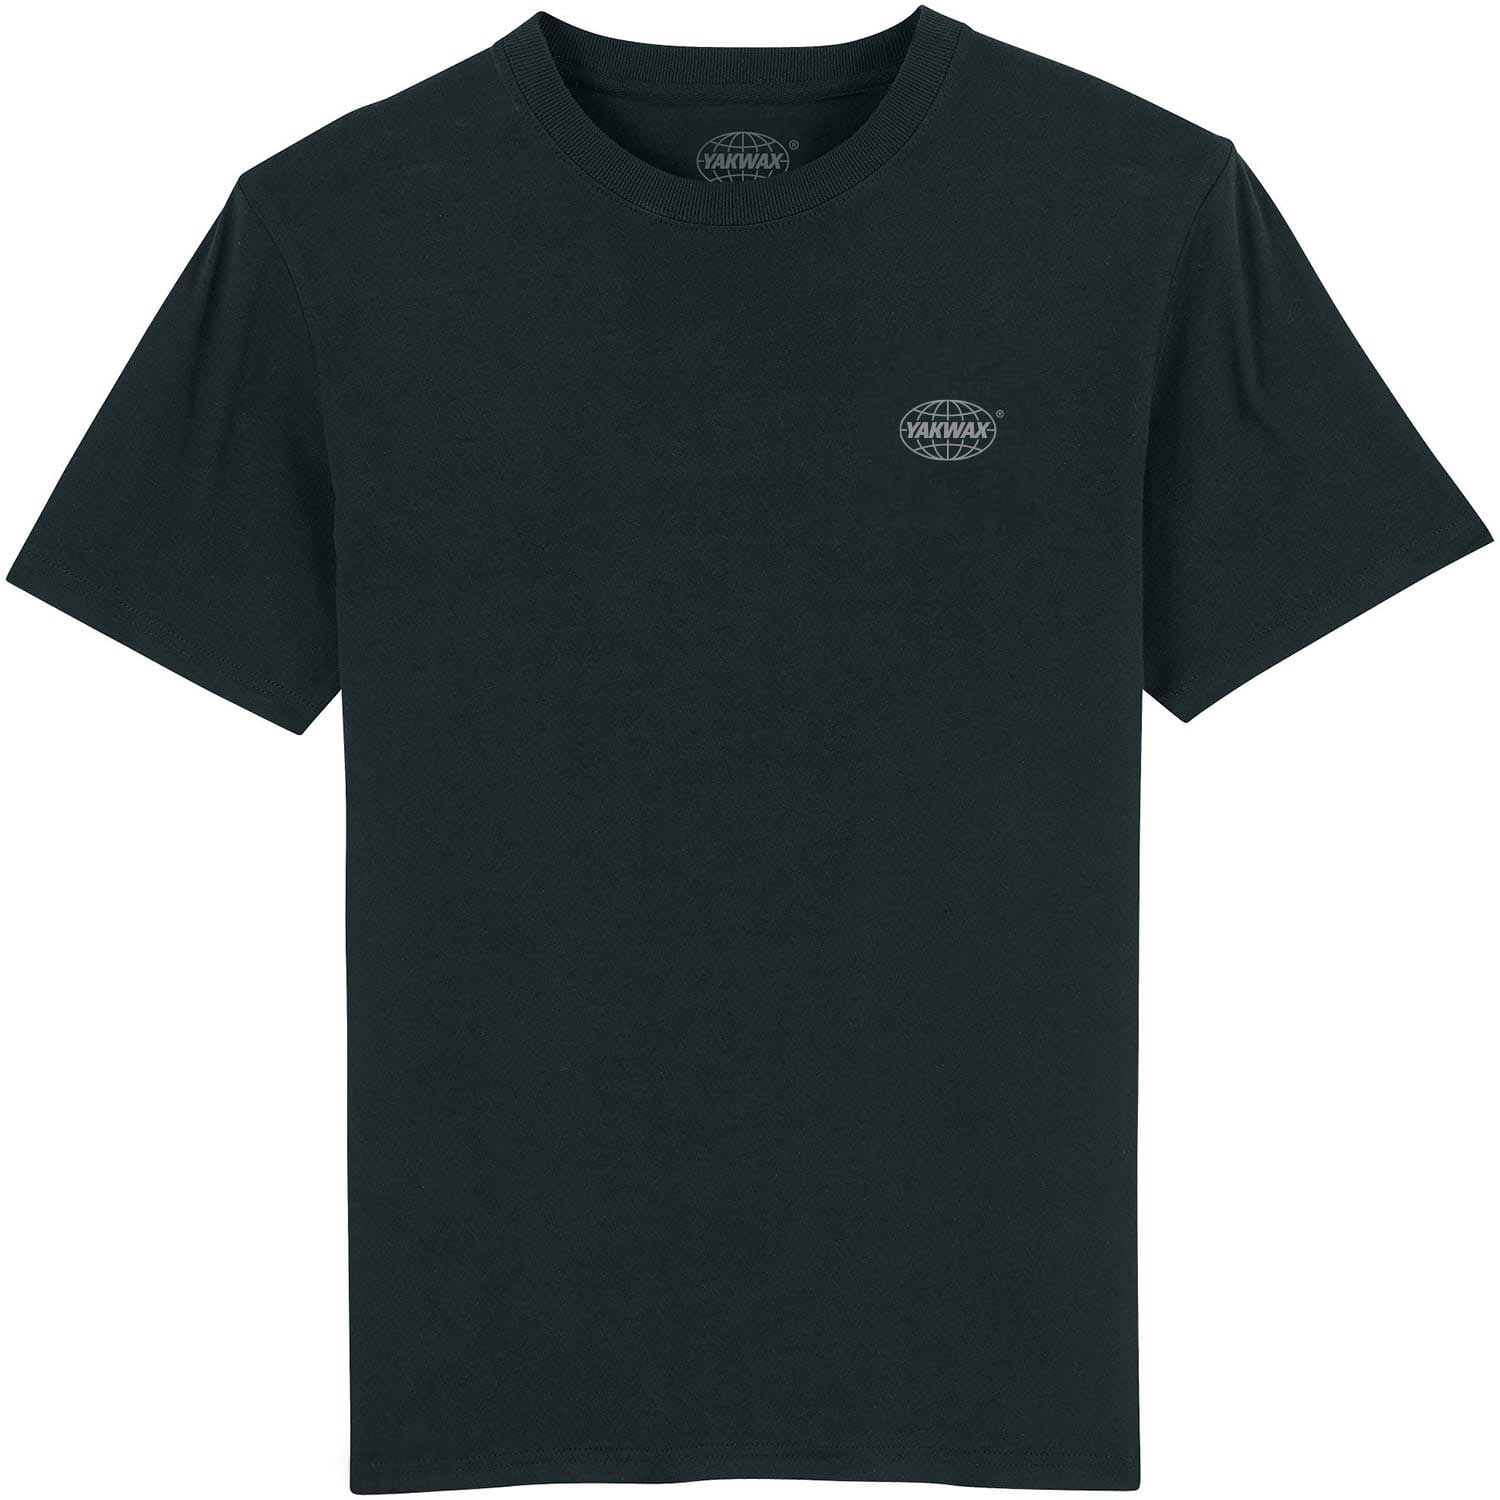 Yakwax Mini Global T-Shirt - Black - Mens Plain T-Shirt by Yakwax